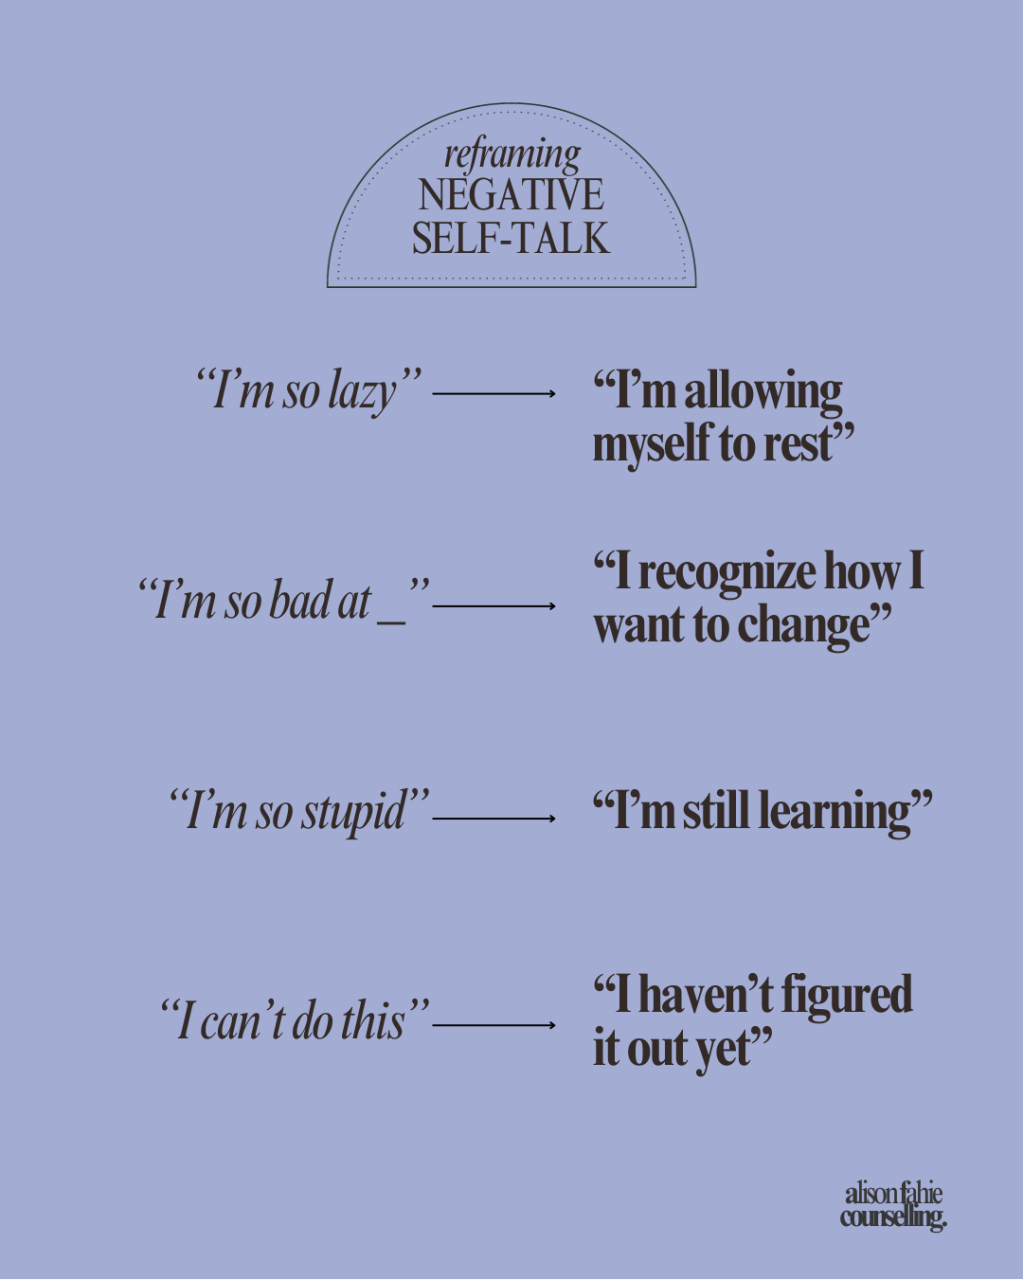 Reframing Negative Self-Talk